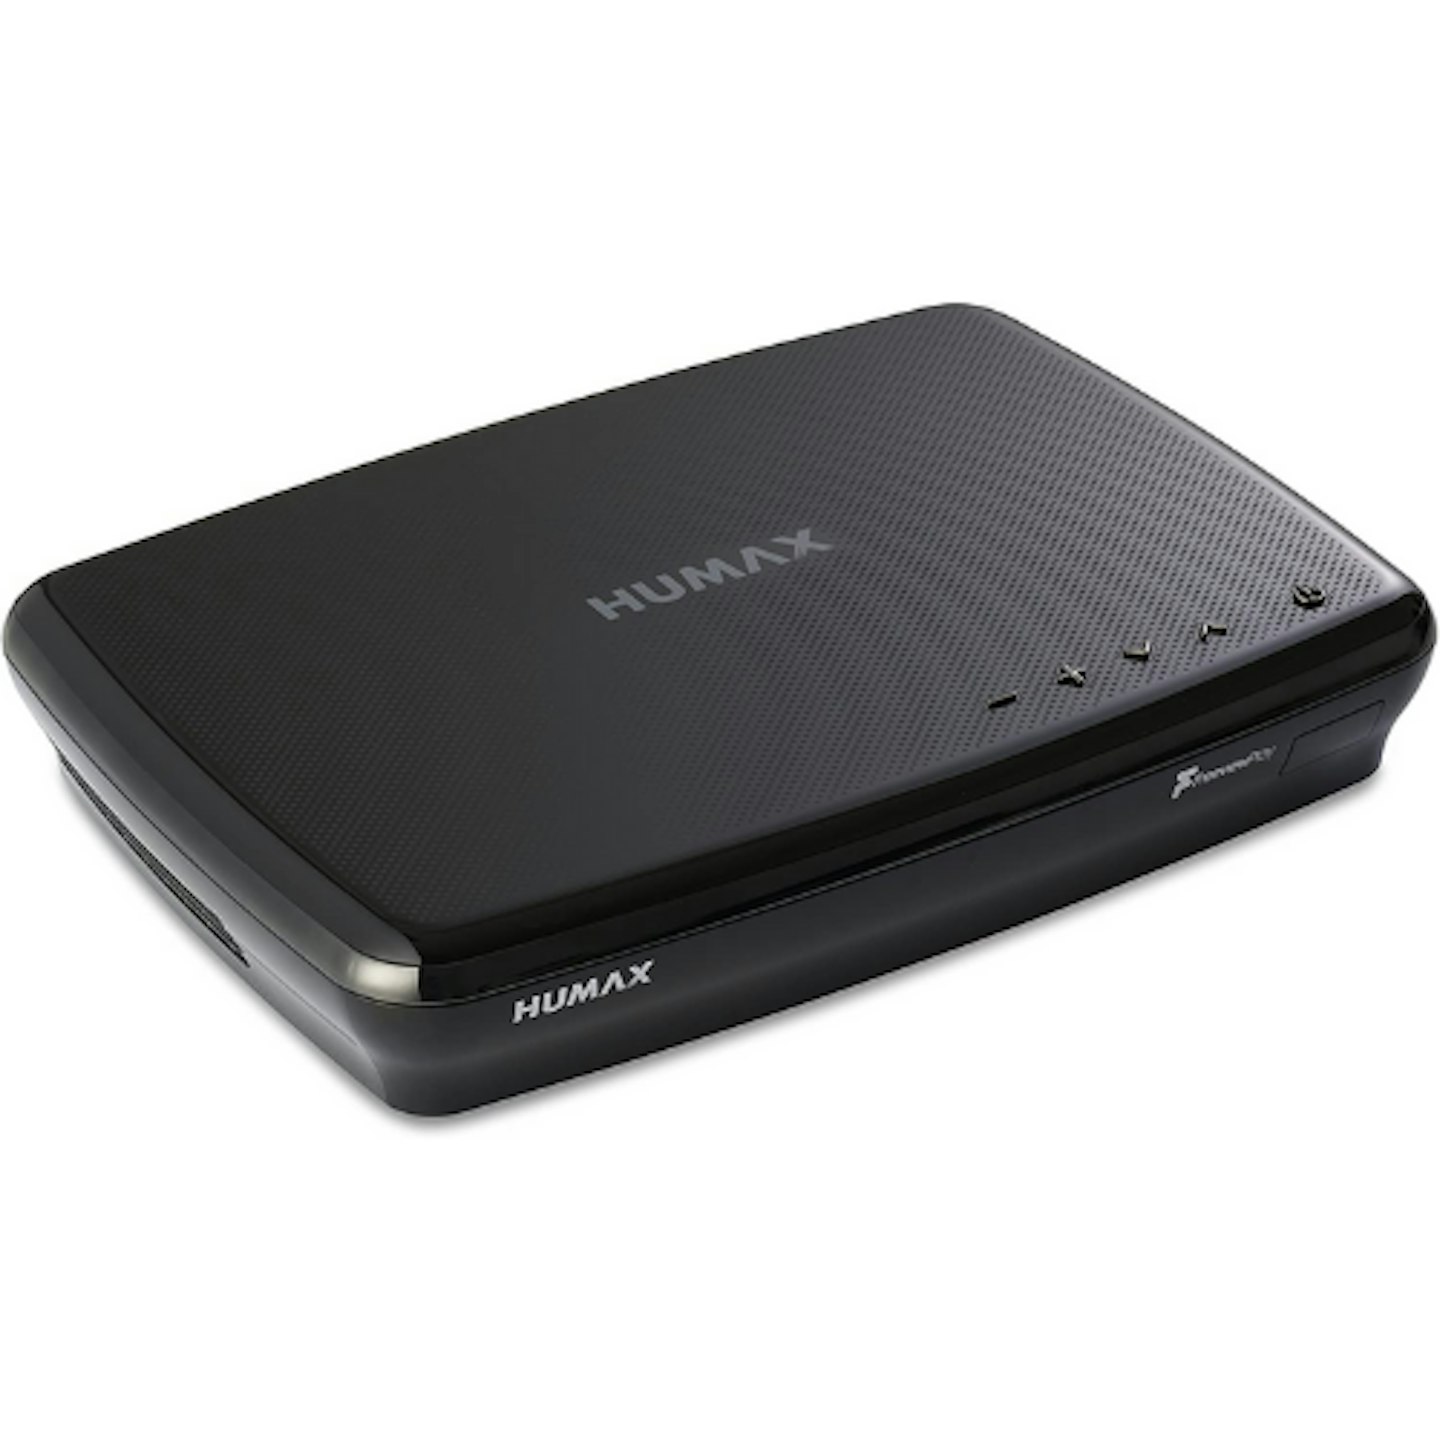 HUMAX FVP-5000T 500GB Freeview Play HD TV Recorder